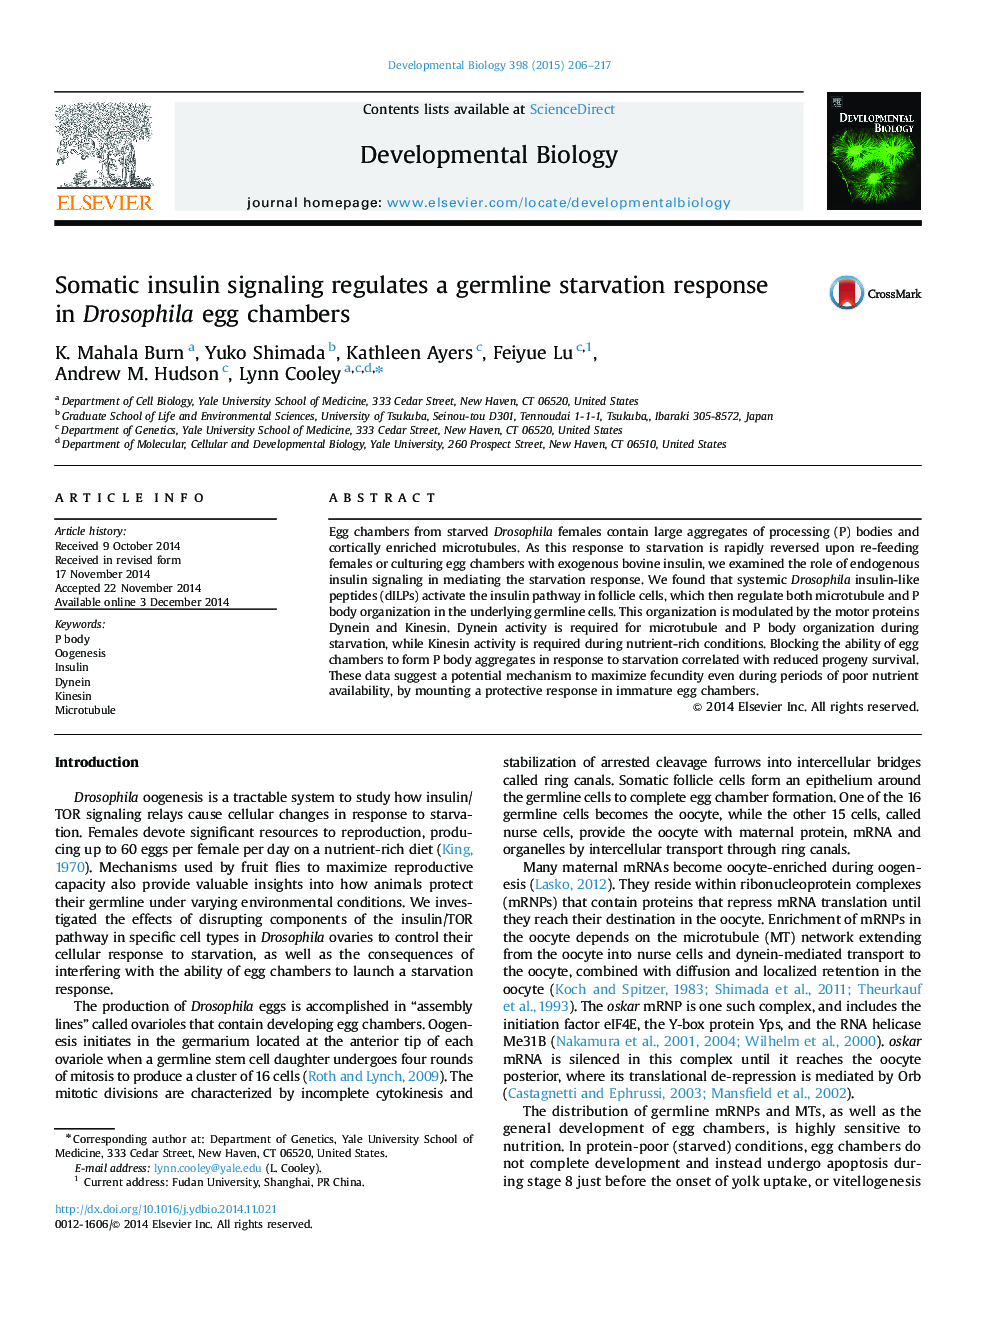 Somatic insulin signaling regulates a germline starvation response in Drosophila egg chambers